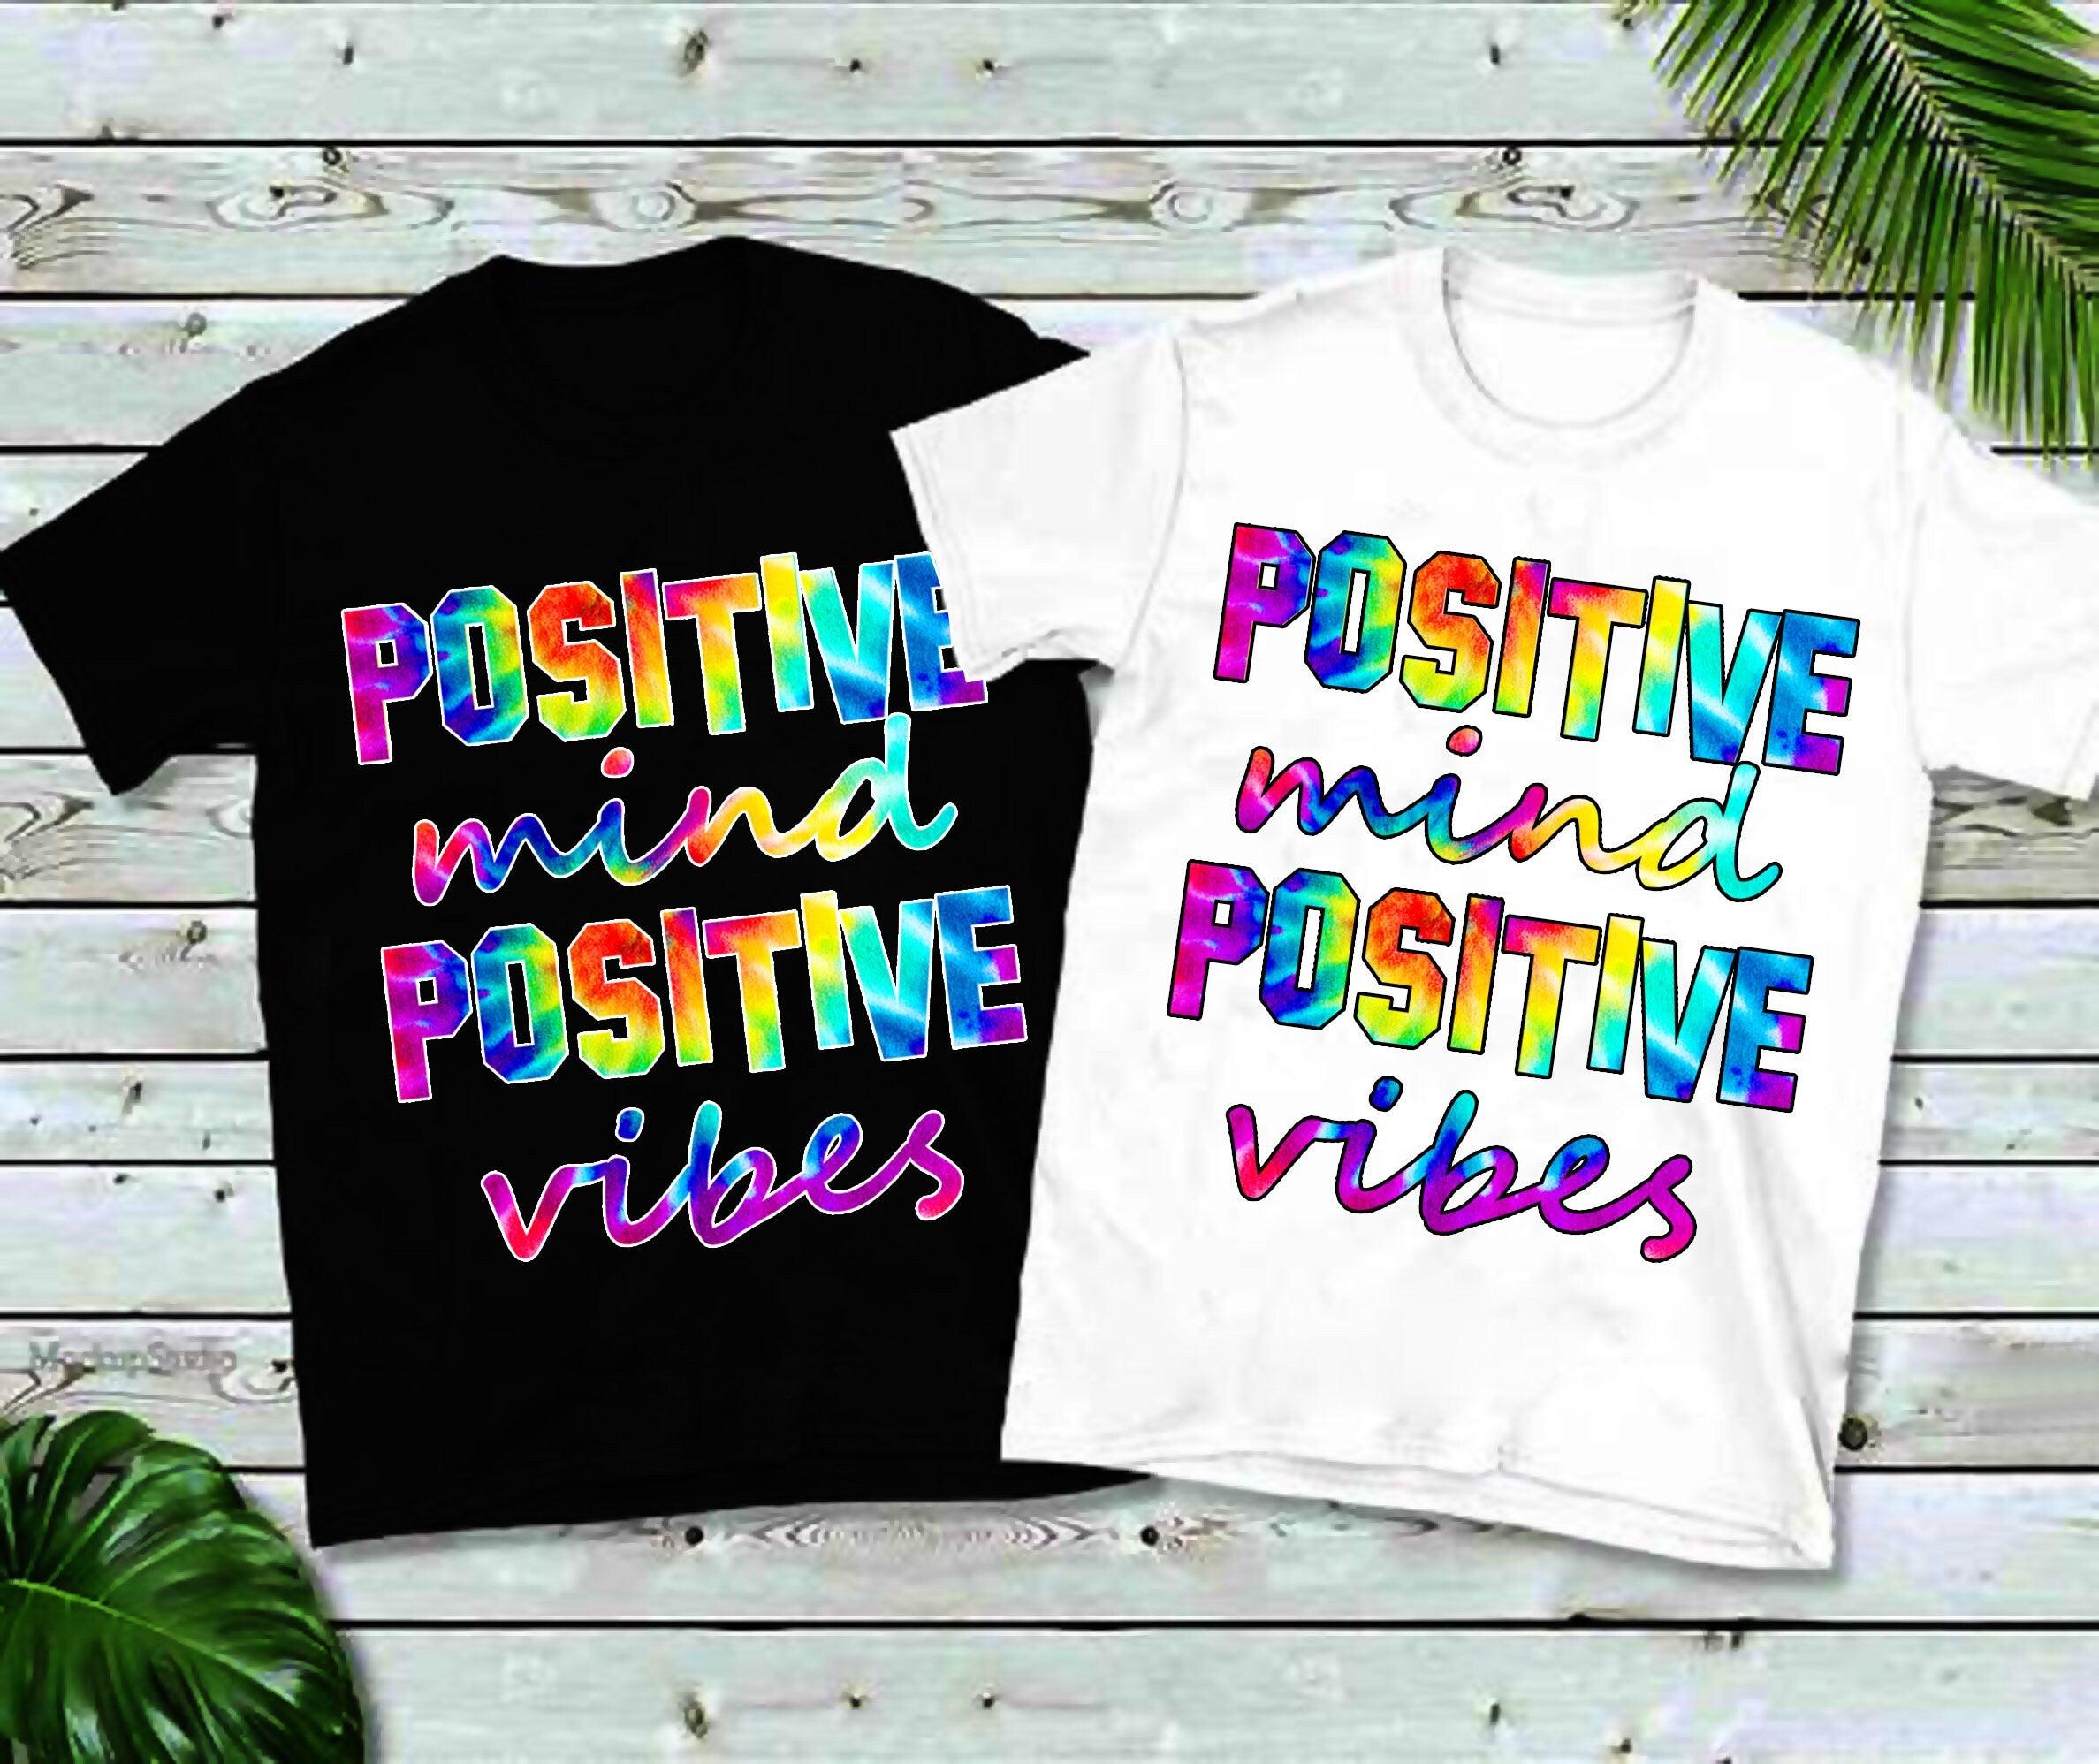 Positiver Geist, positive Stimmung | T-Shirts mit Farbdruck, Yoga-T-Shirt, T-Shirt für Männer, T-Shirt für Frauen, Yoga, Motivation – plusminusco.com